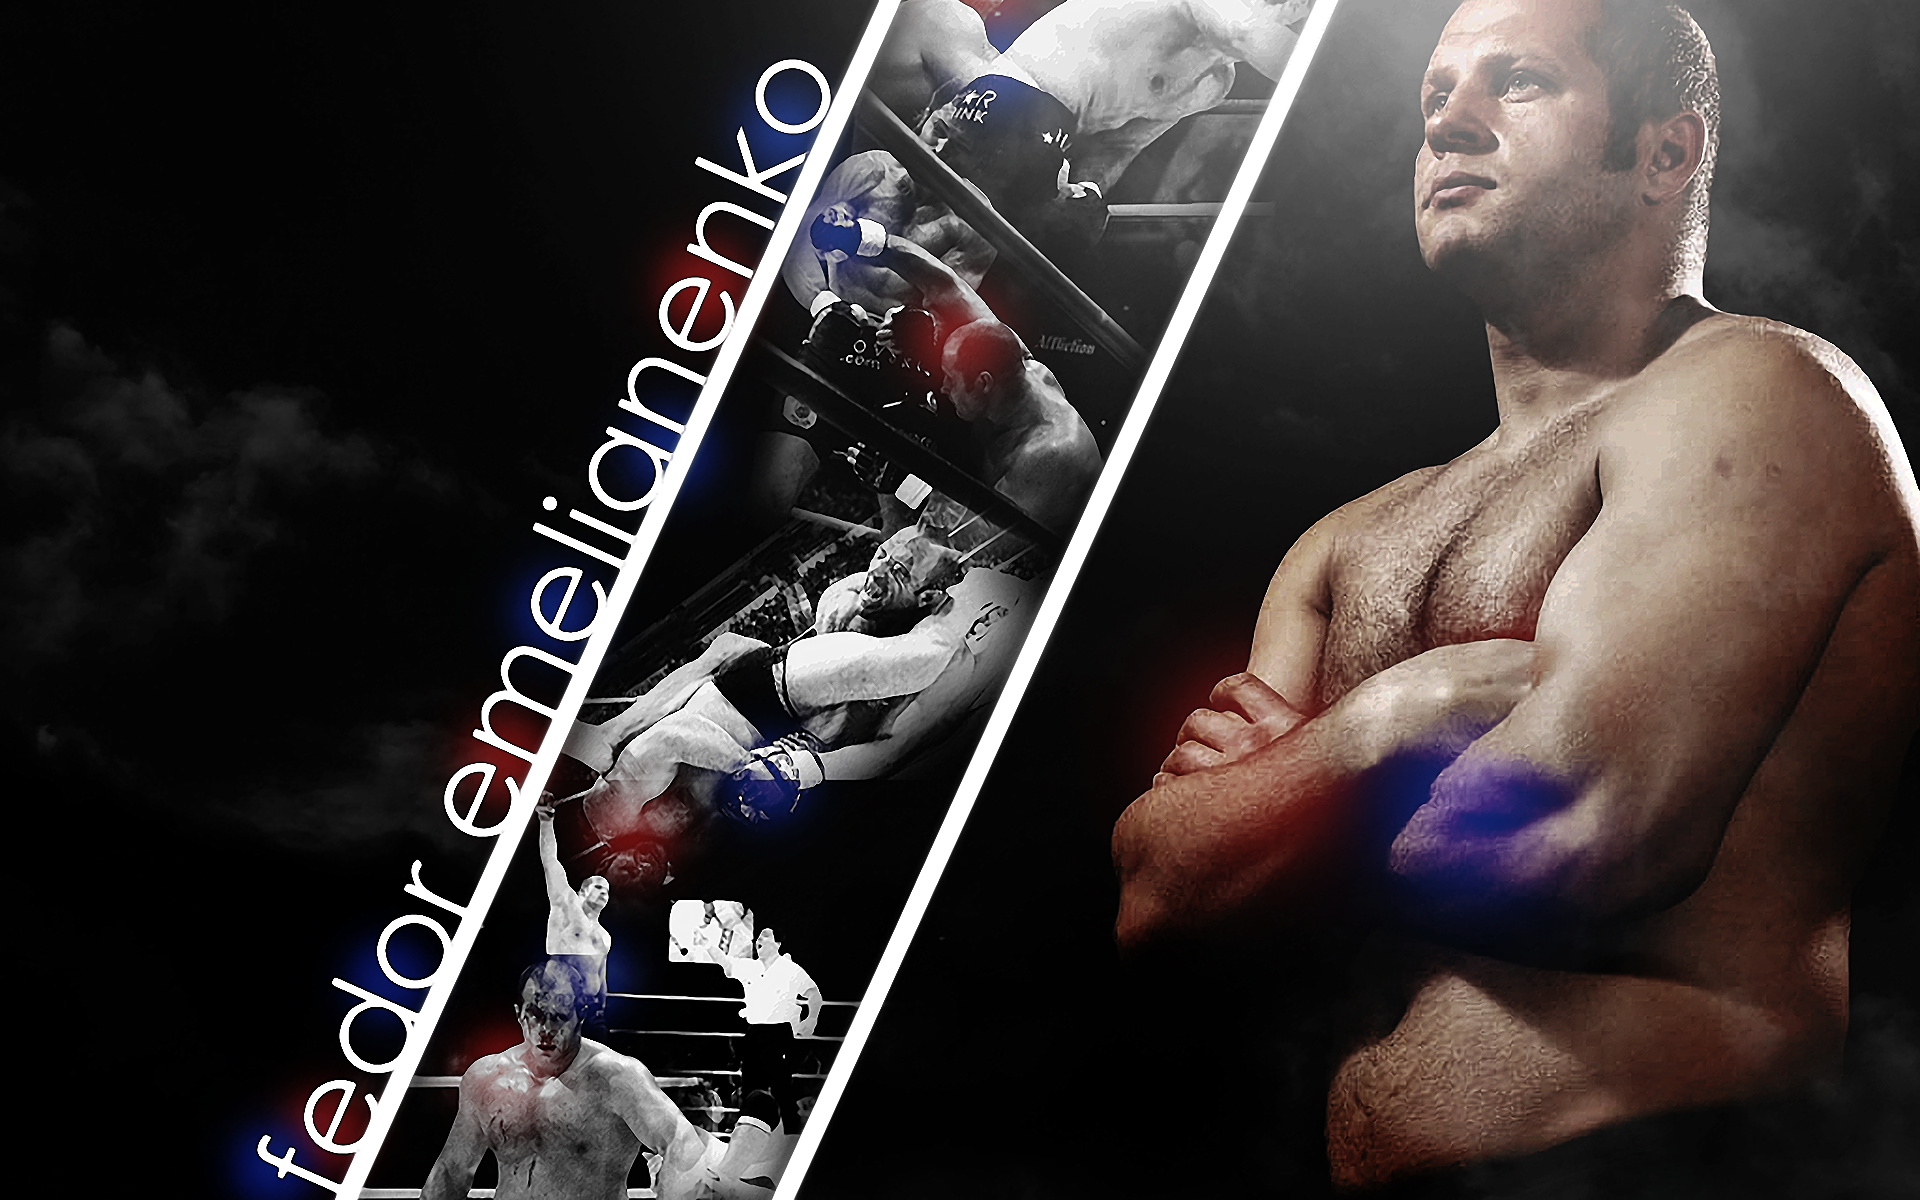 Combat Sports: Fedor Emelianenko, Russian Heavyweight Mixed Martial Artist, The Last Emperor. 1920x1200 HD Background.